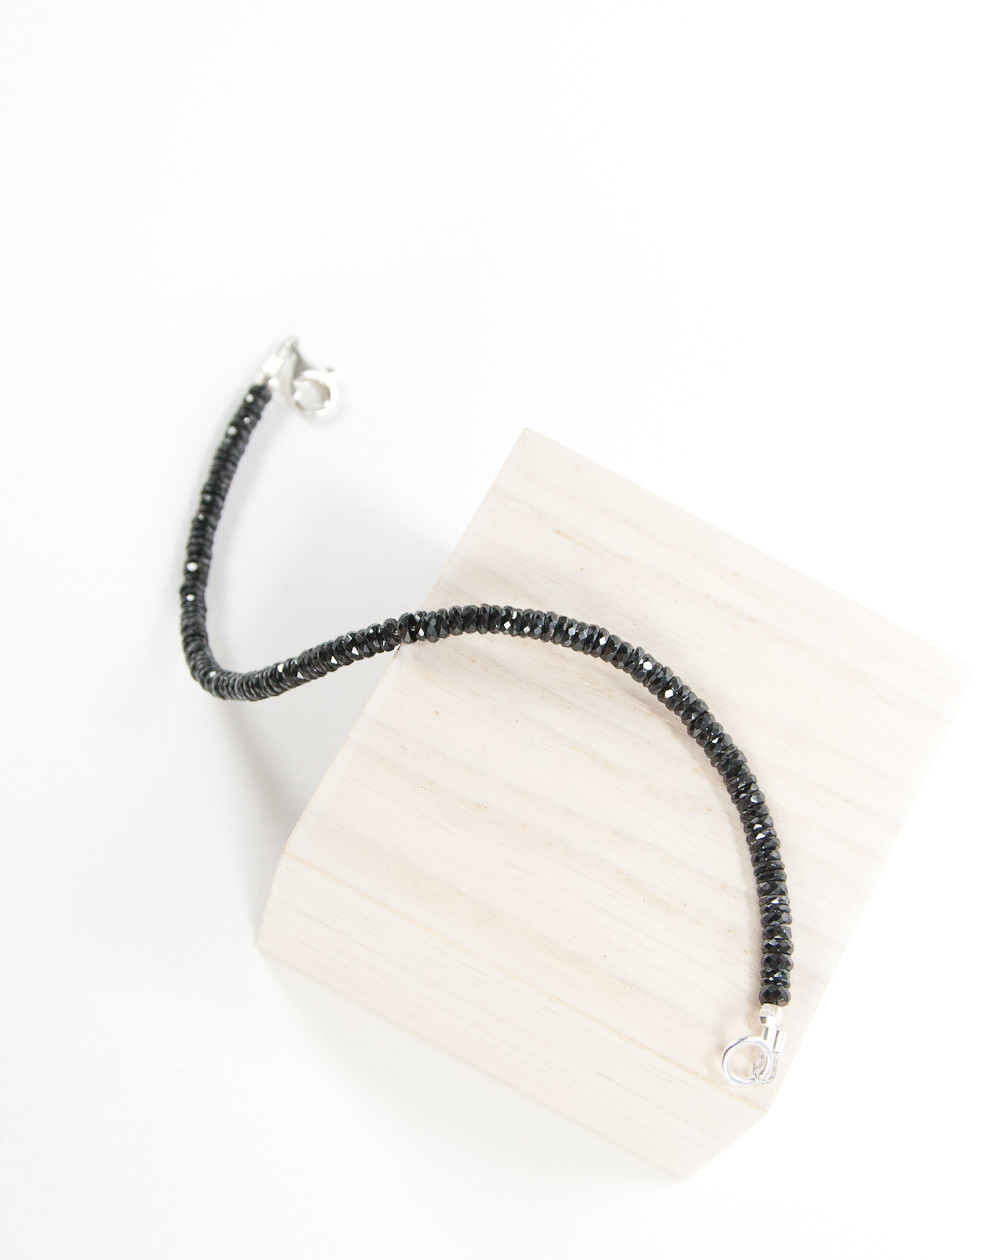 Bracelet en spinelle noir, Sanuk Création, Bayonne